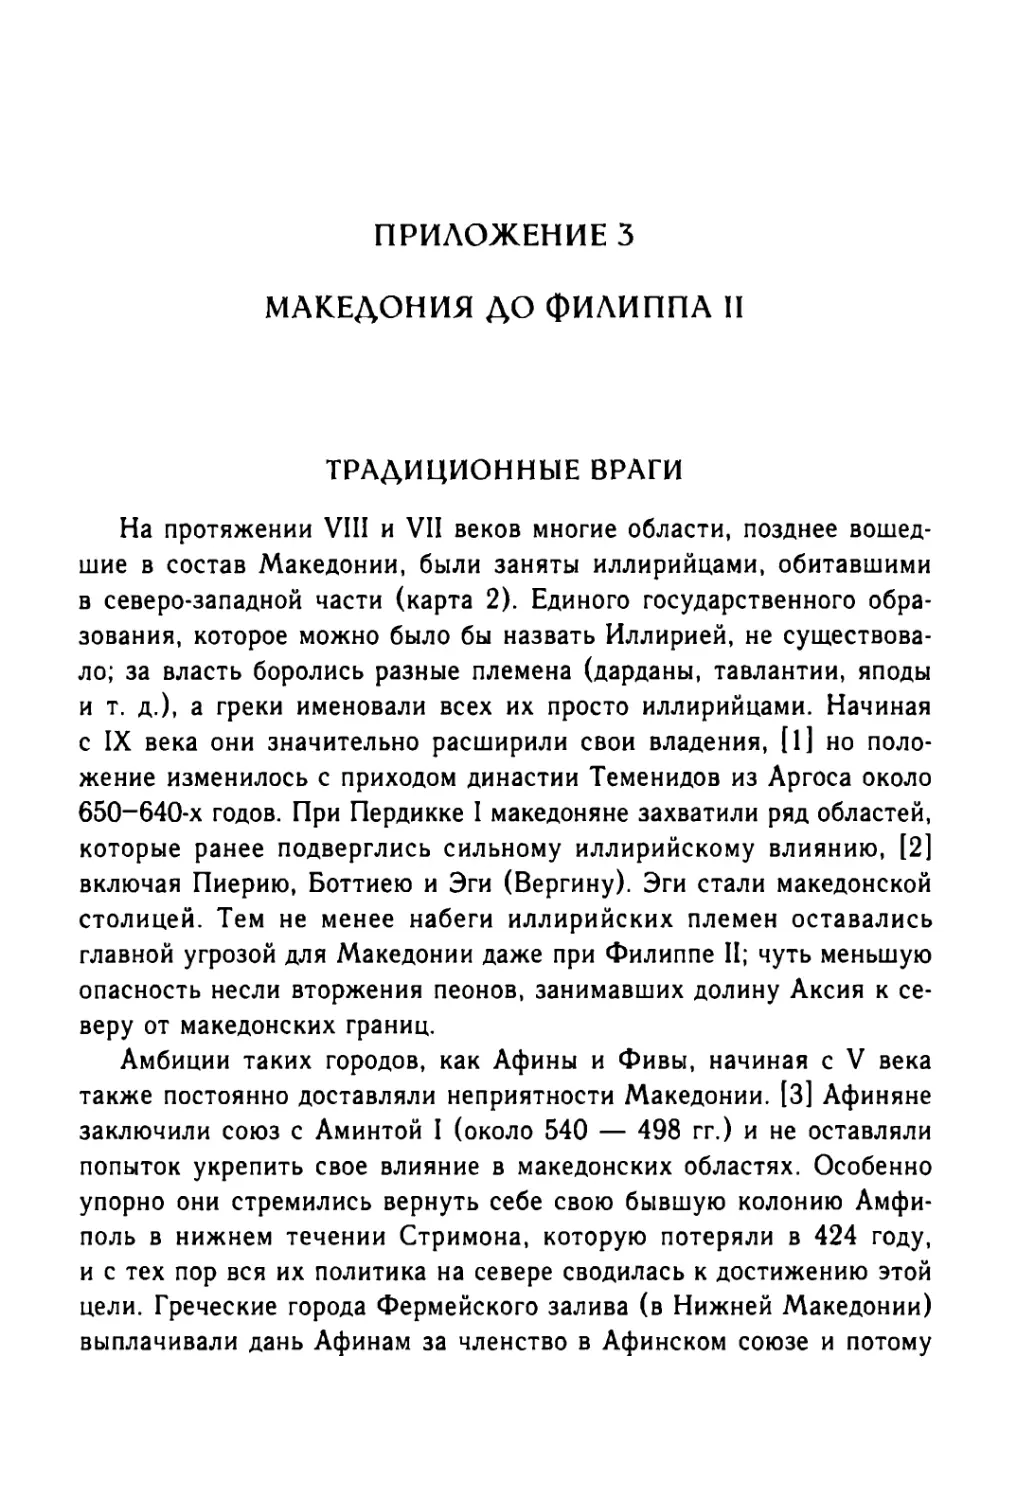 Приложение 3. Македония до Филиппа II